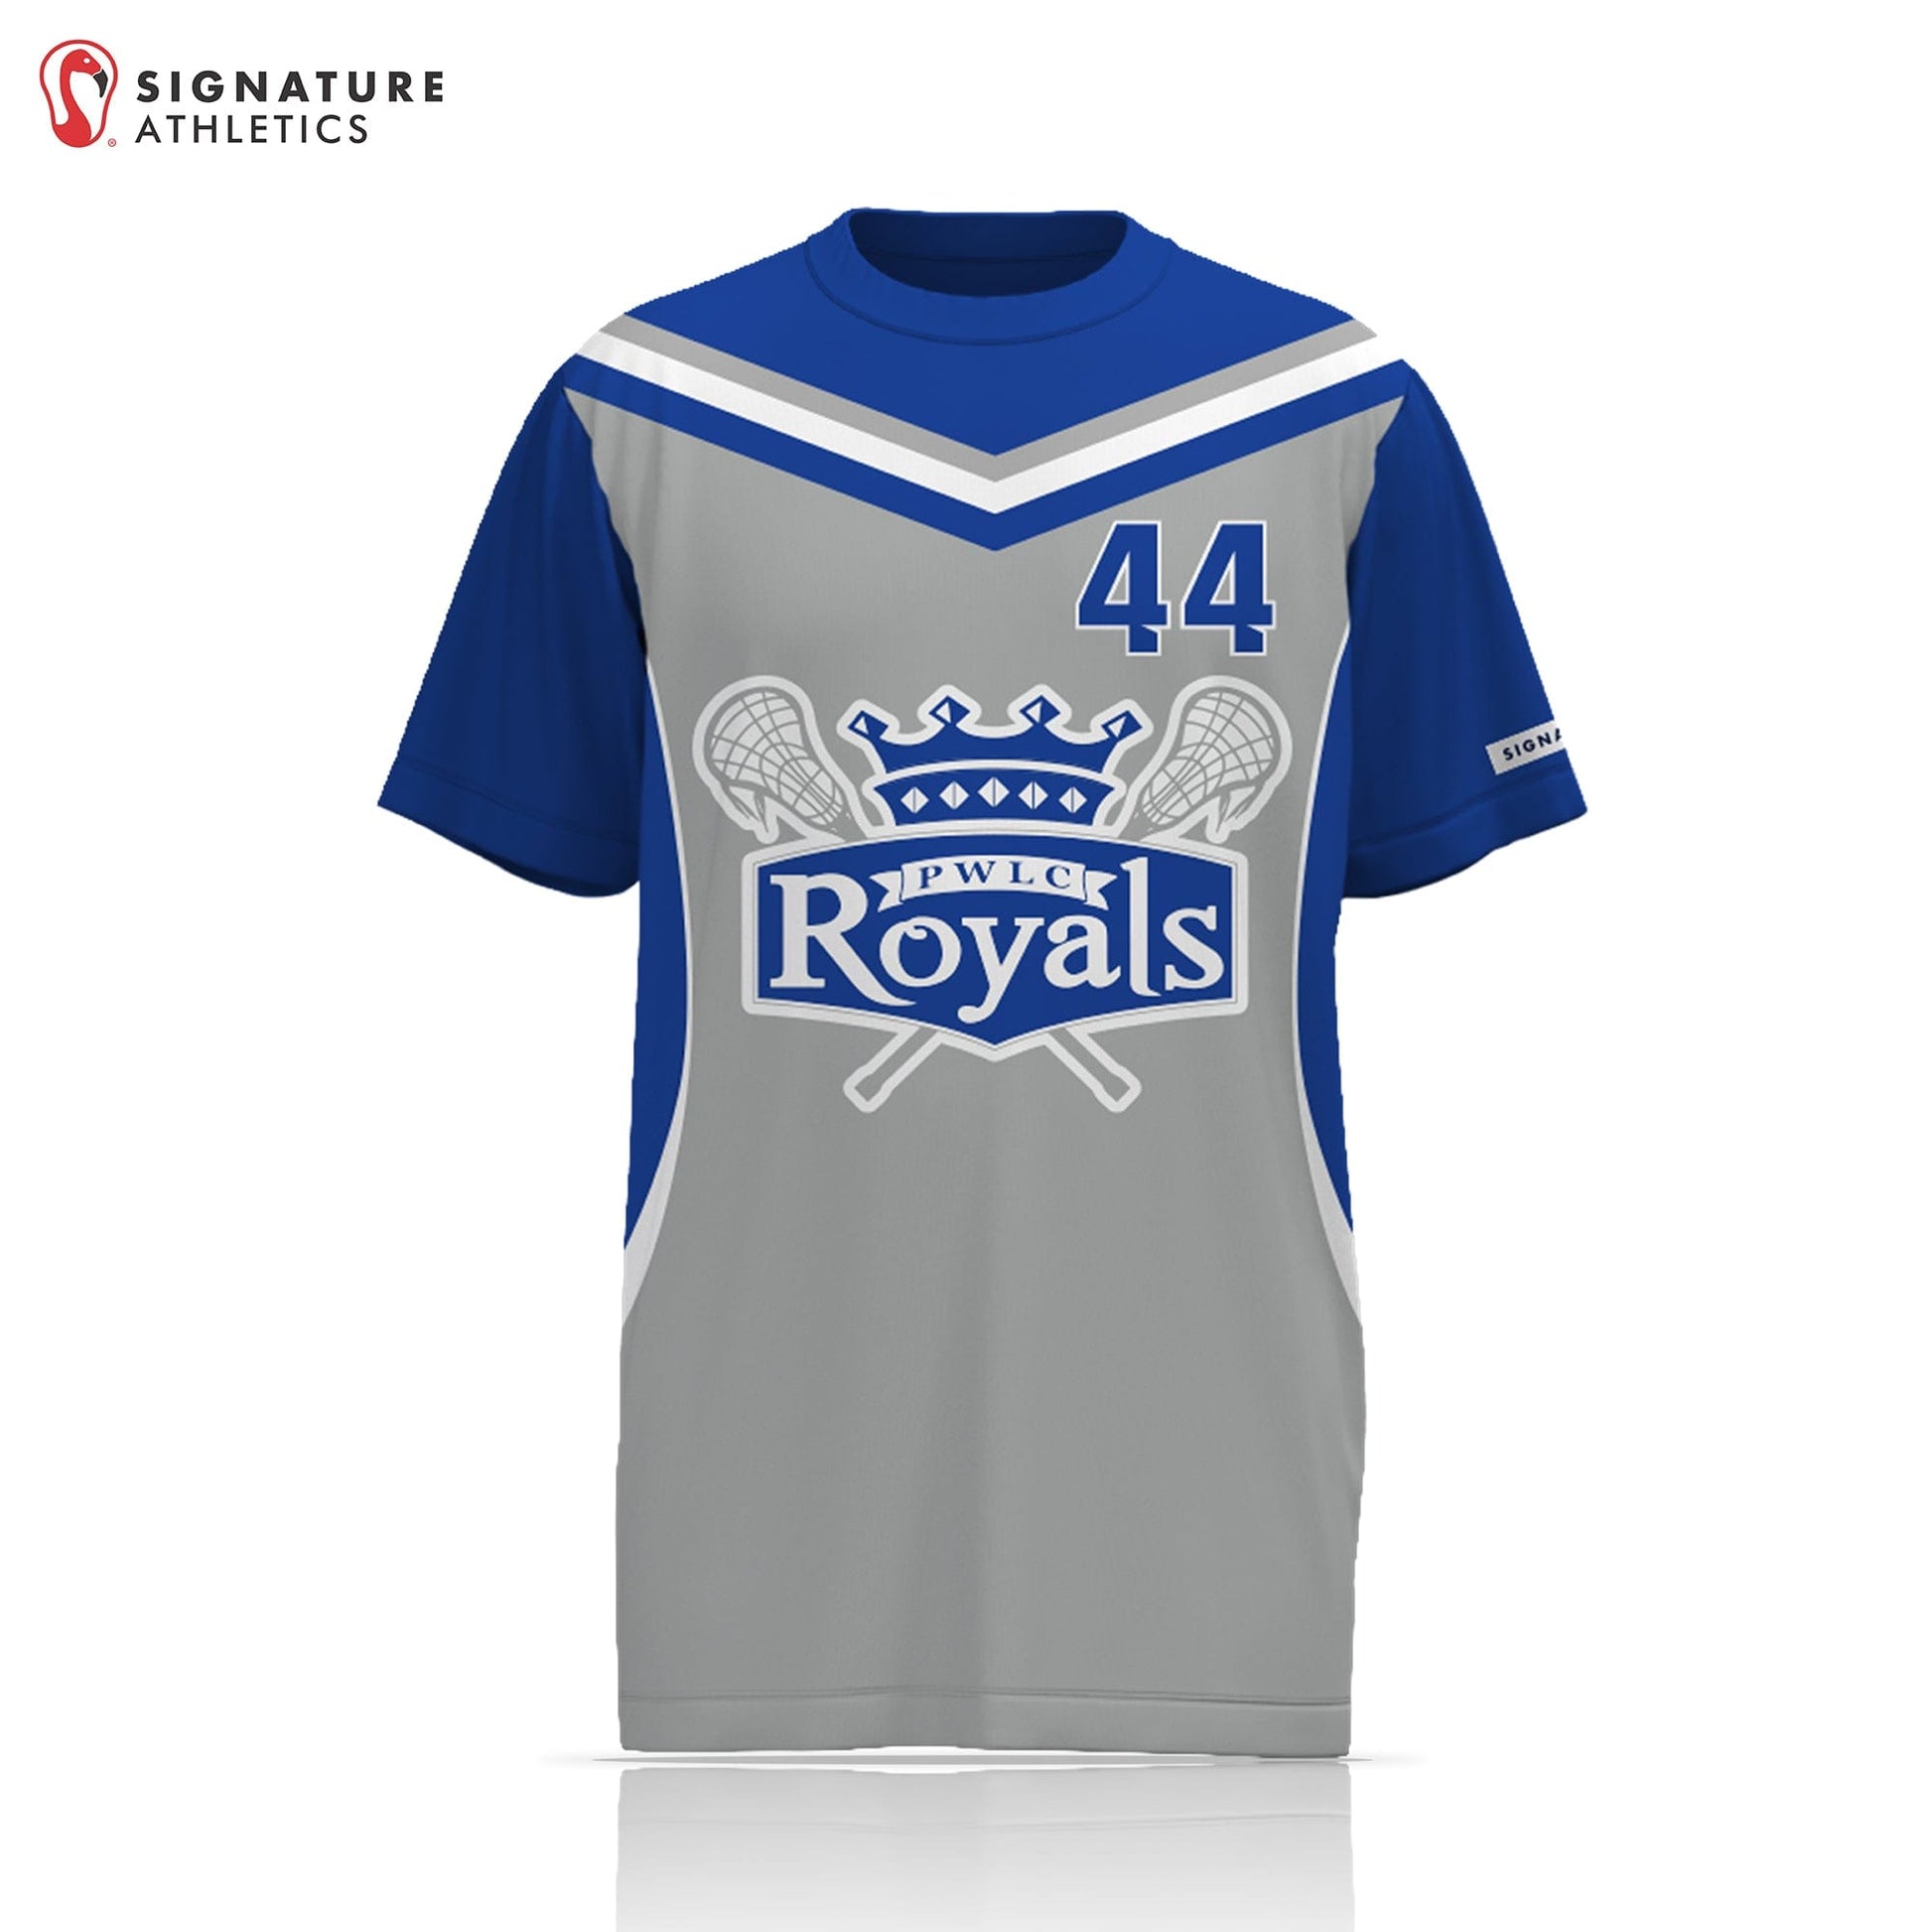 Prince William Lacrosse Club - Royals Unisex Performance Short Sleeve Shooting Shirt - Basic 2.0:Boys 2028 Signature Lacrosse